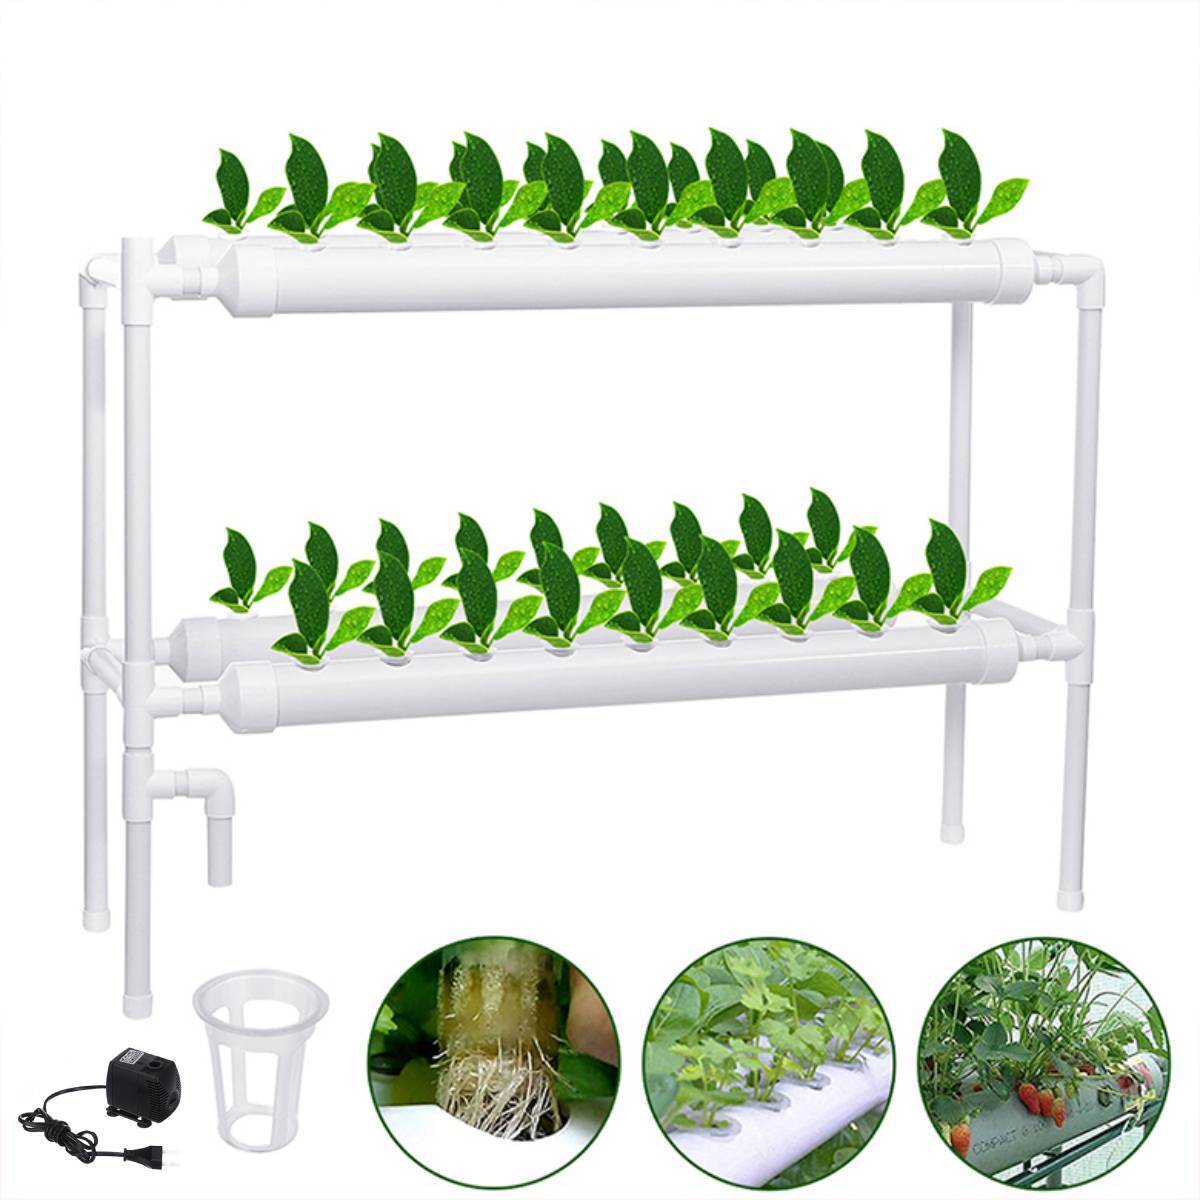 36 Plant Sites Hydroponic Grow Tool Kits Vegetable Fruit Garden System AU Plug